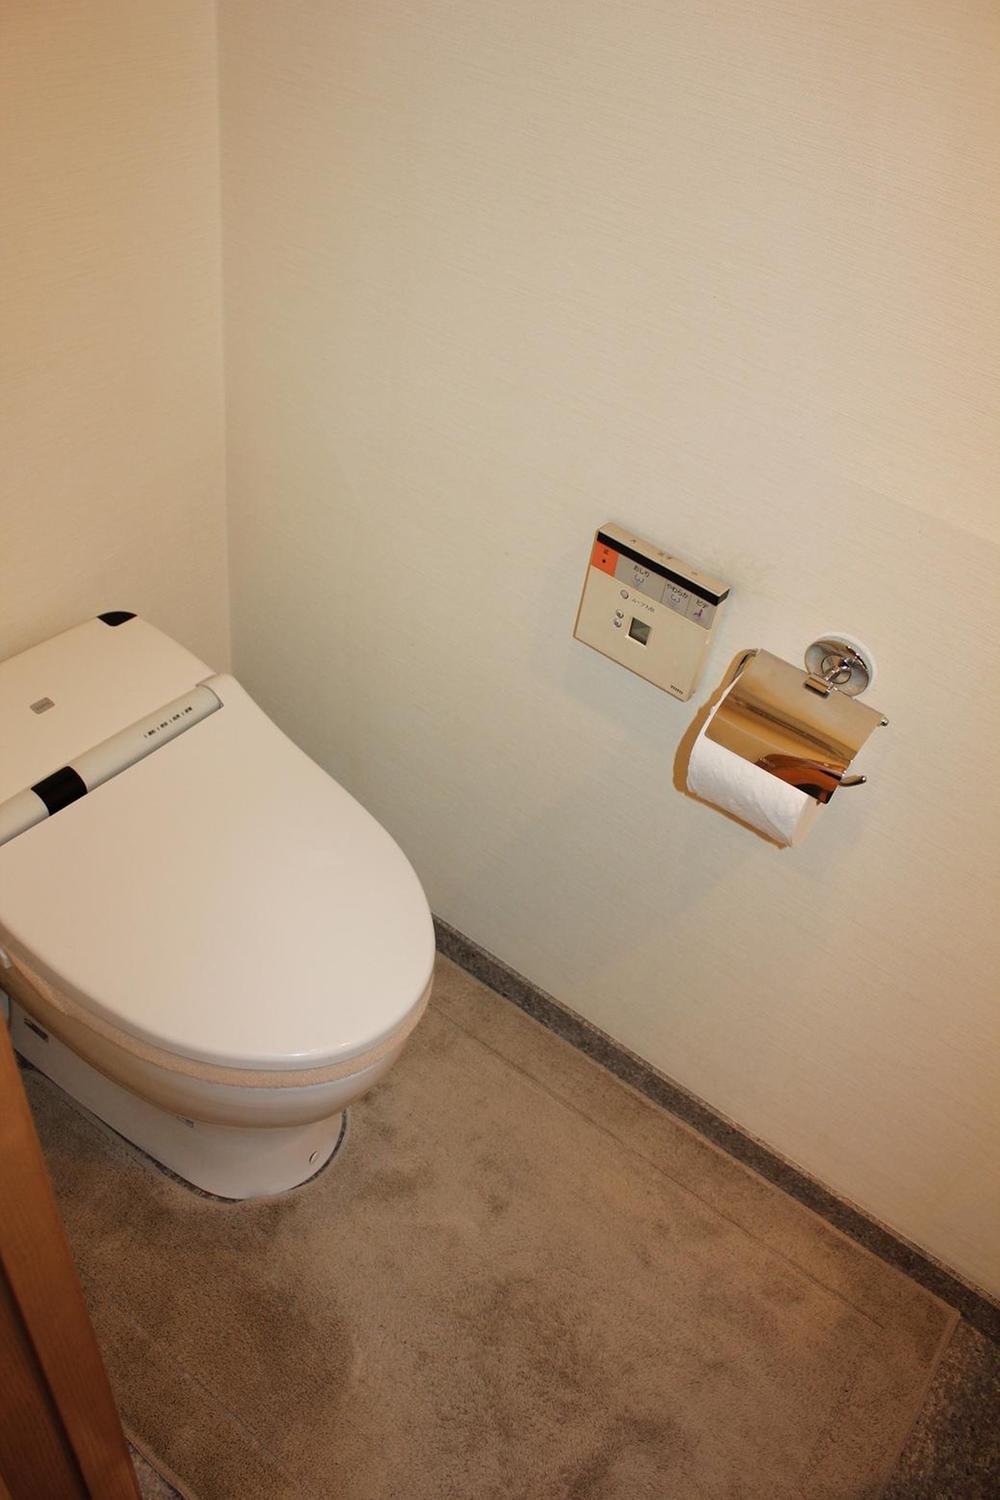 Toilet. Restroom (September 2013) Shooting